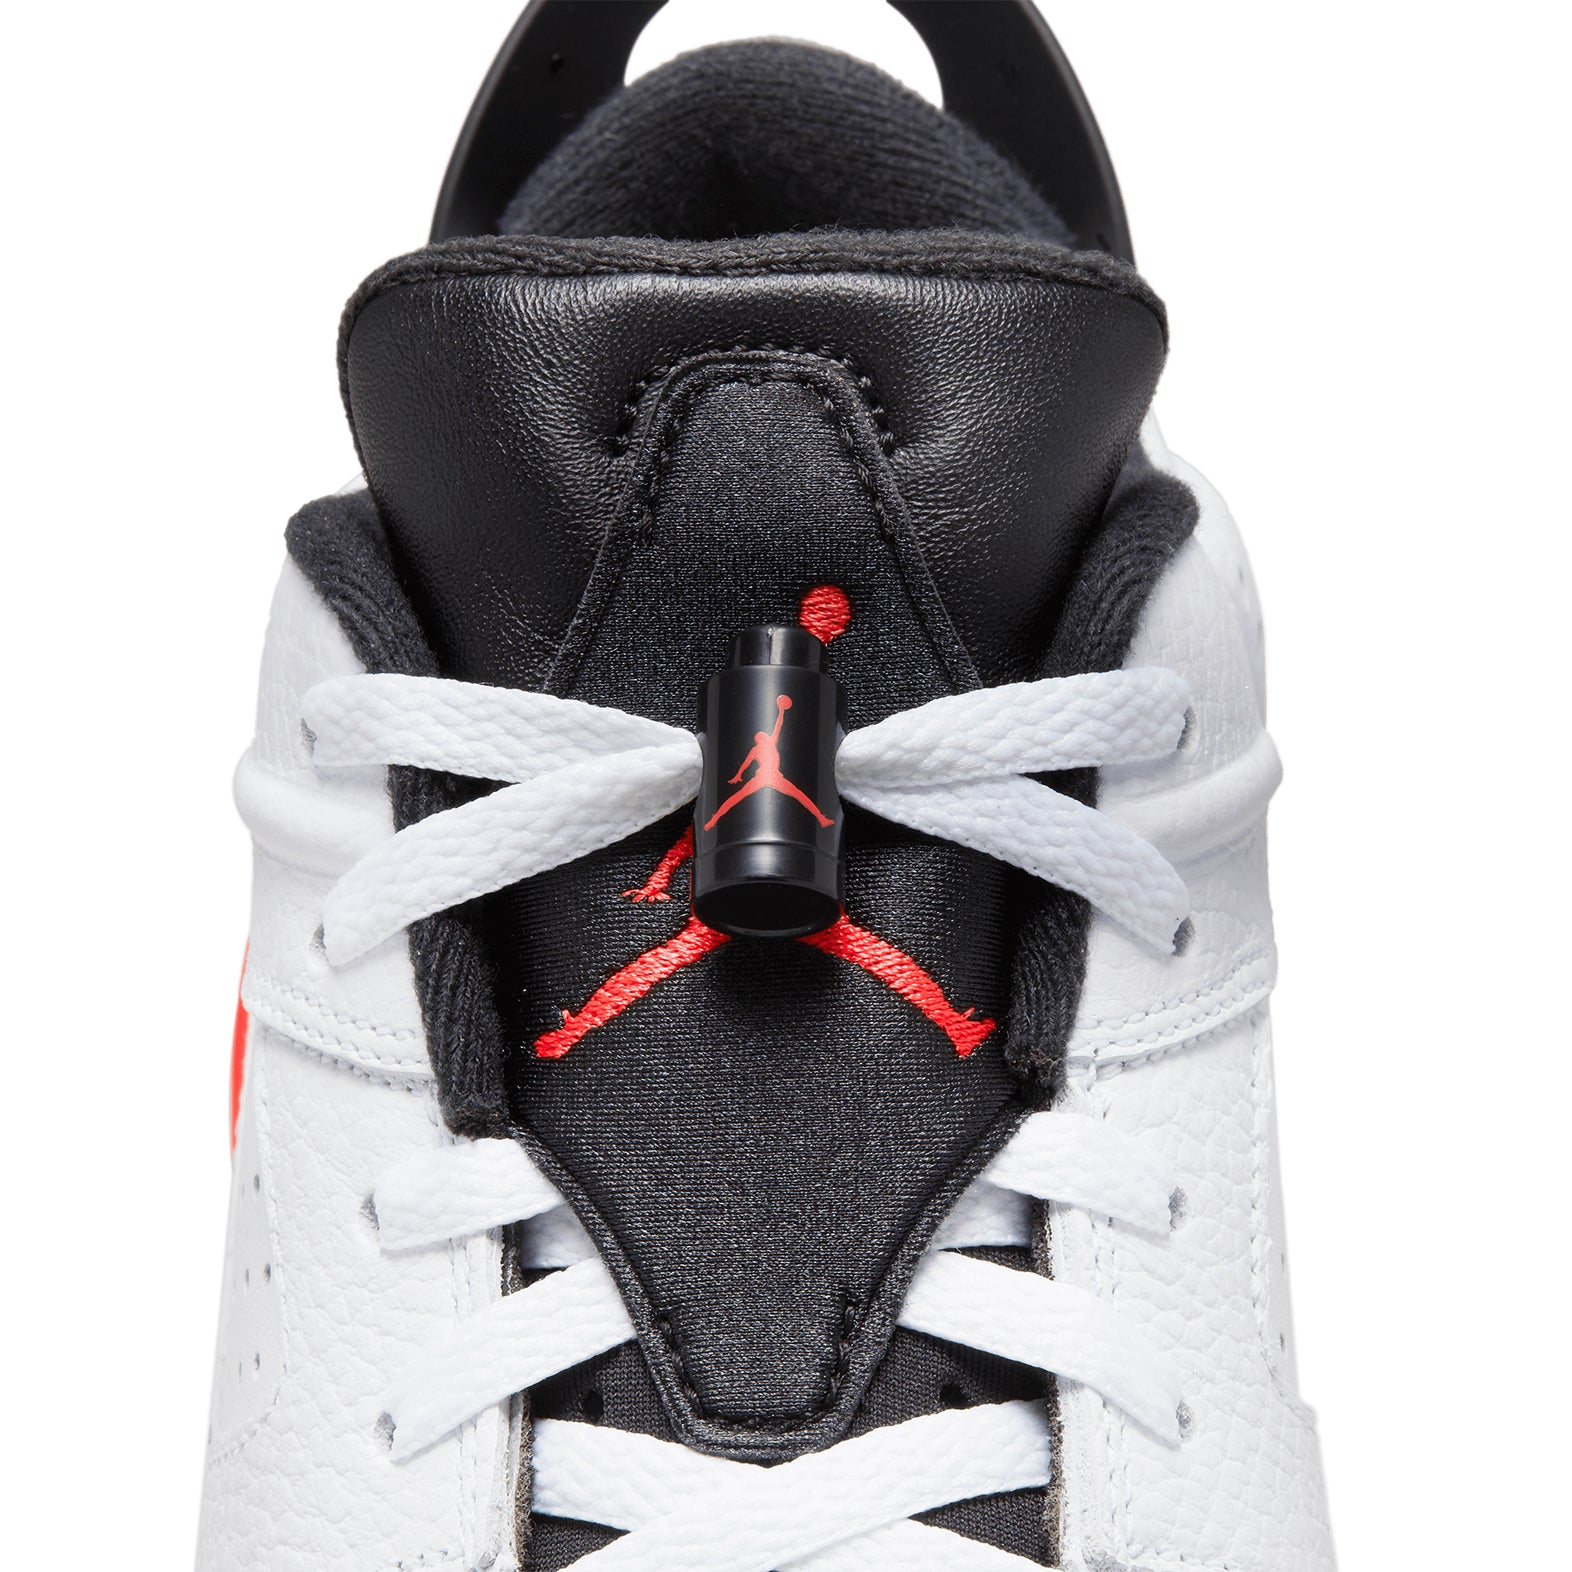 Air Jordan Retro 6 G NRG Golf Shoes - First Major Limited Edition - ON SALE